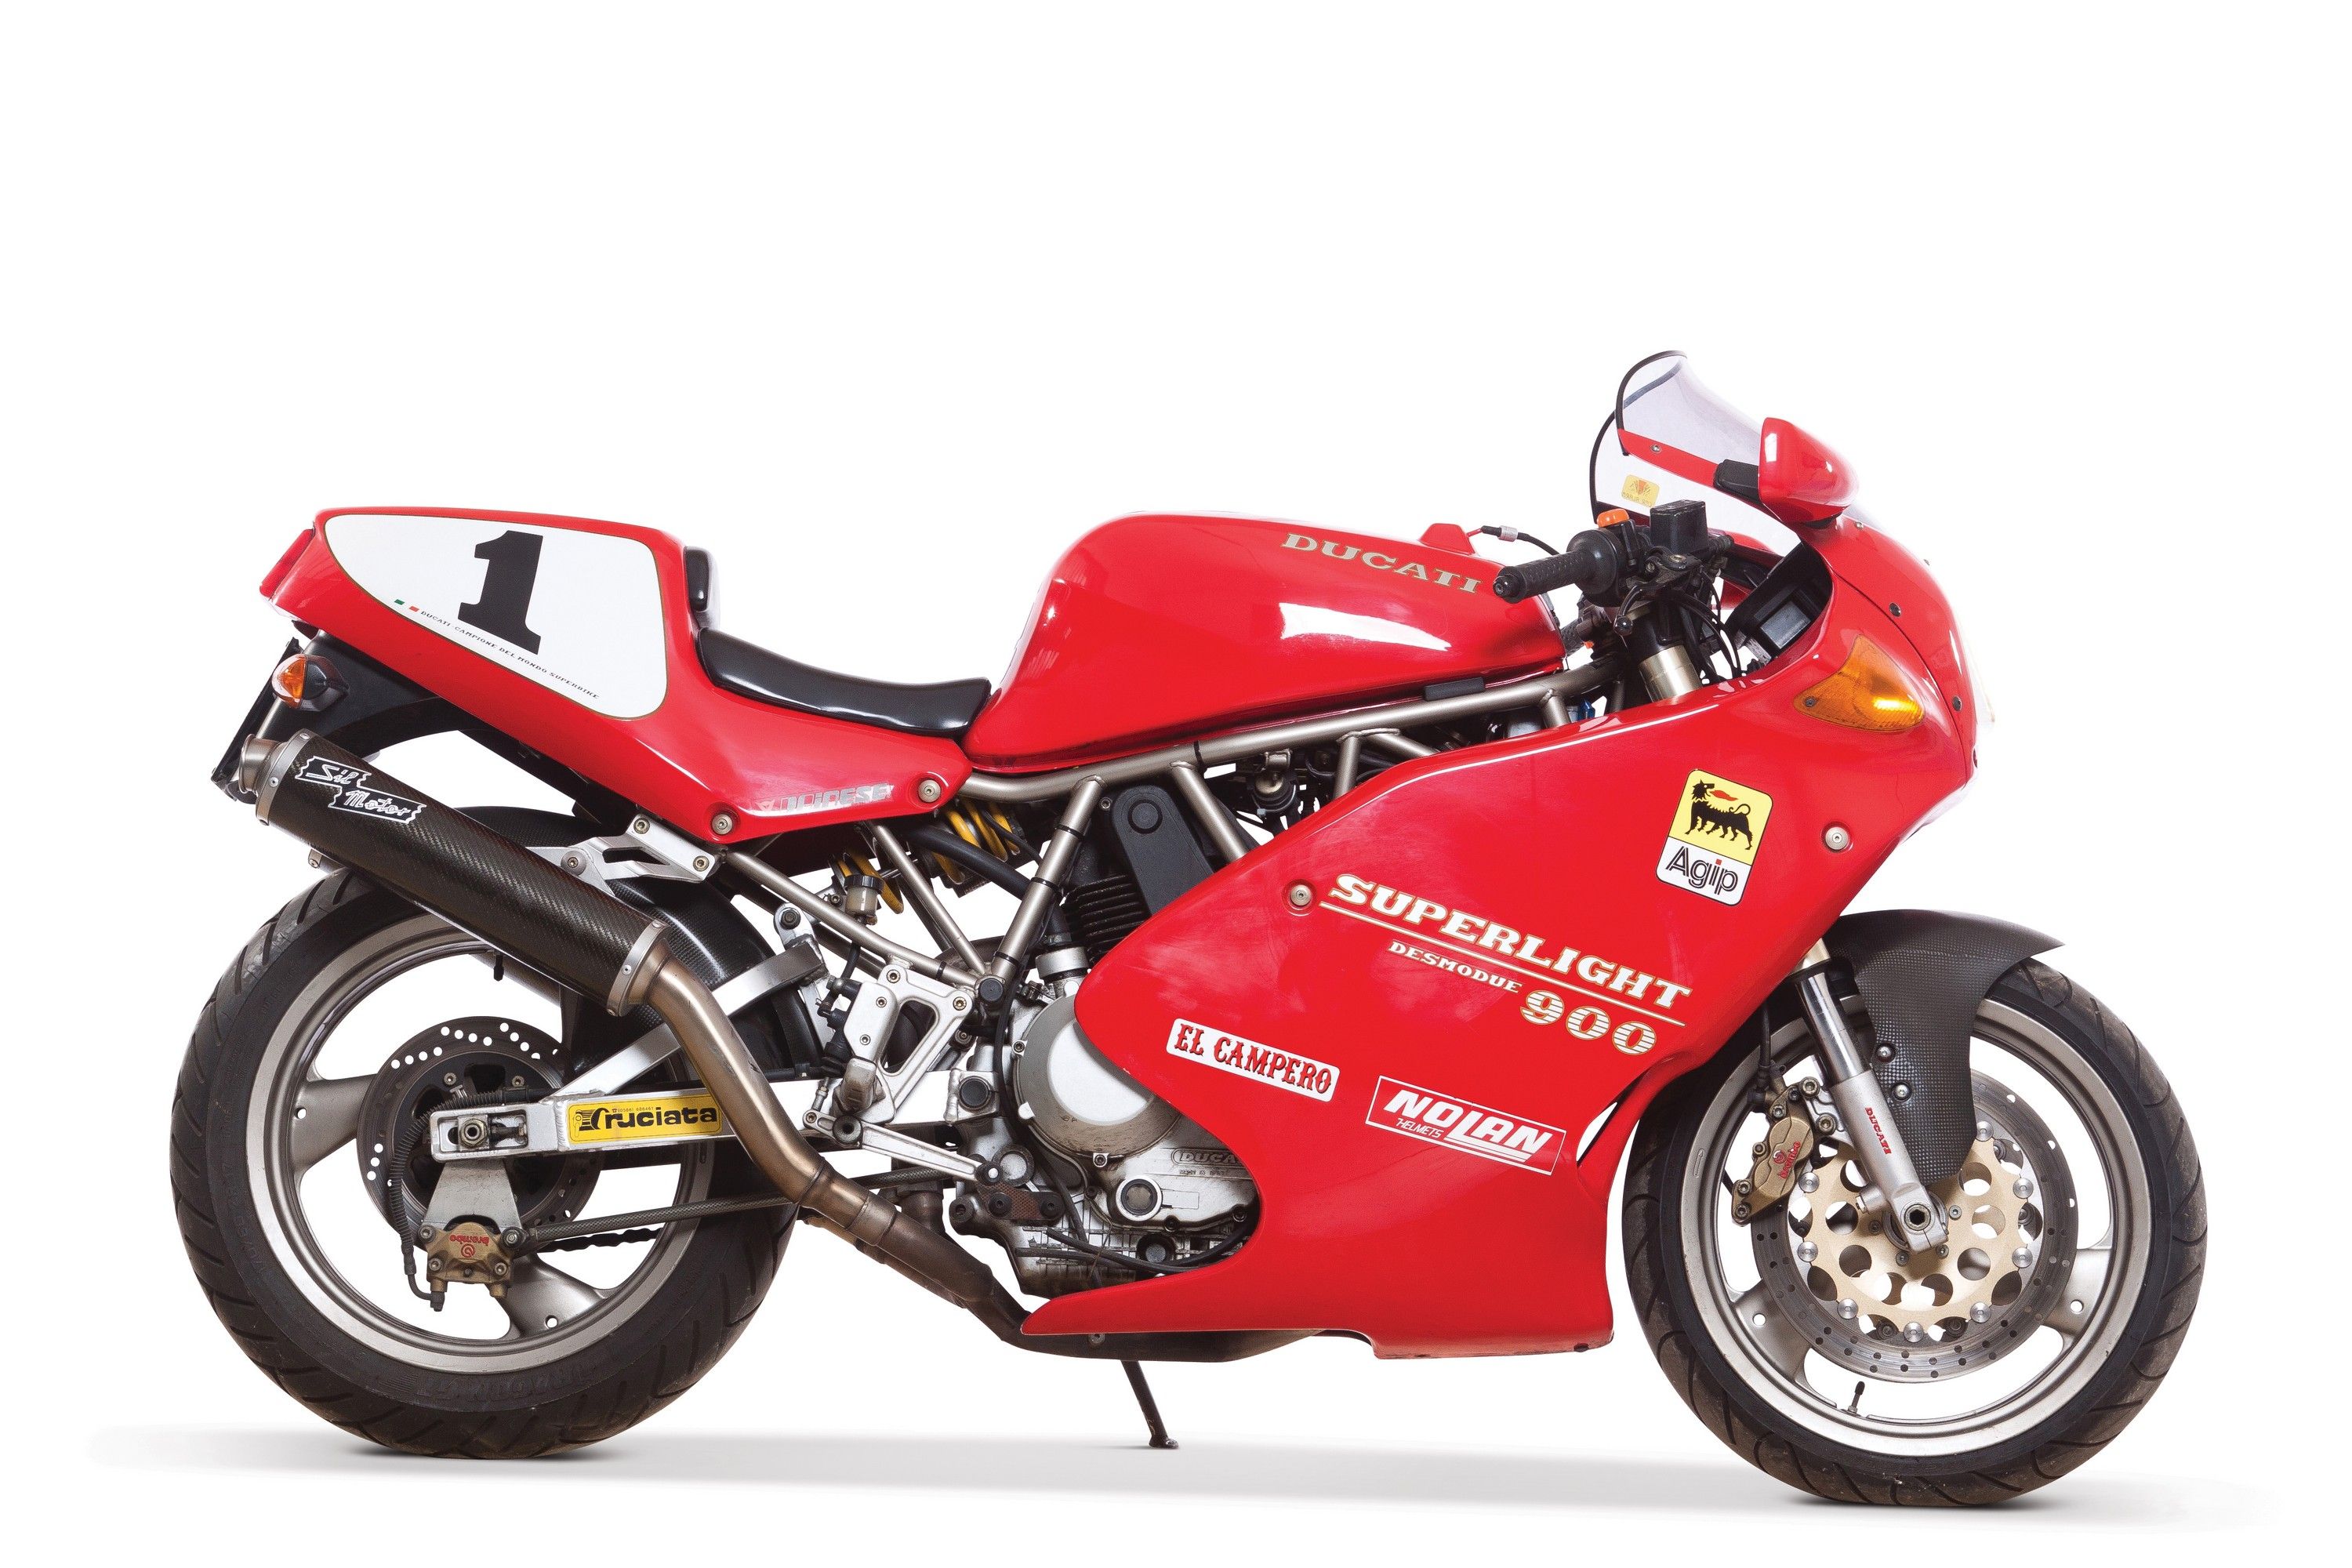 1993 Ducati 900 Superlight II